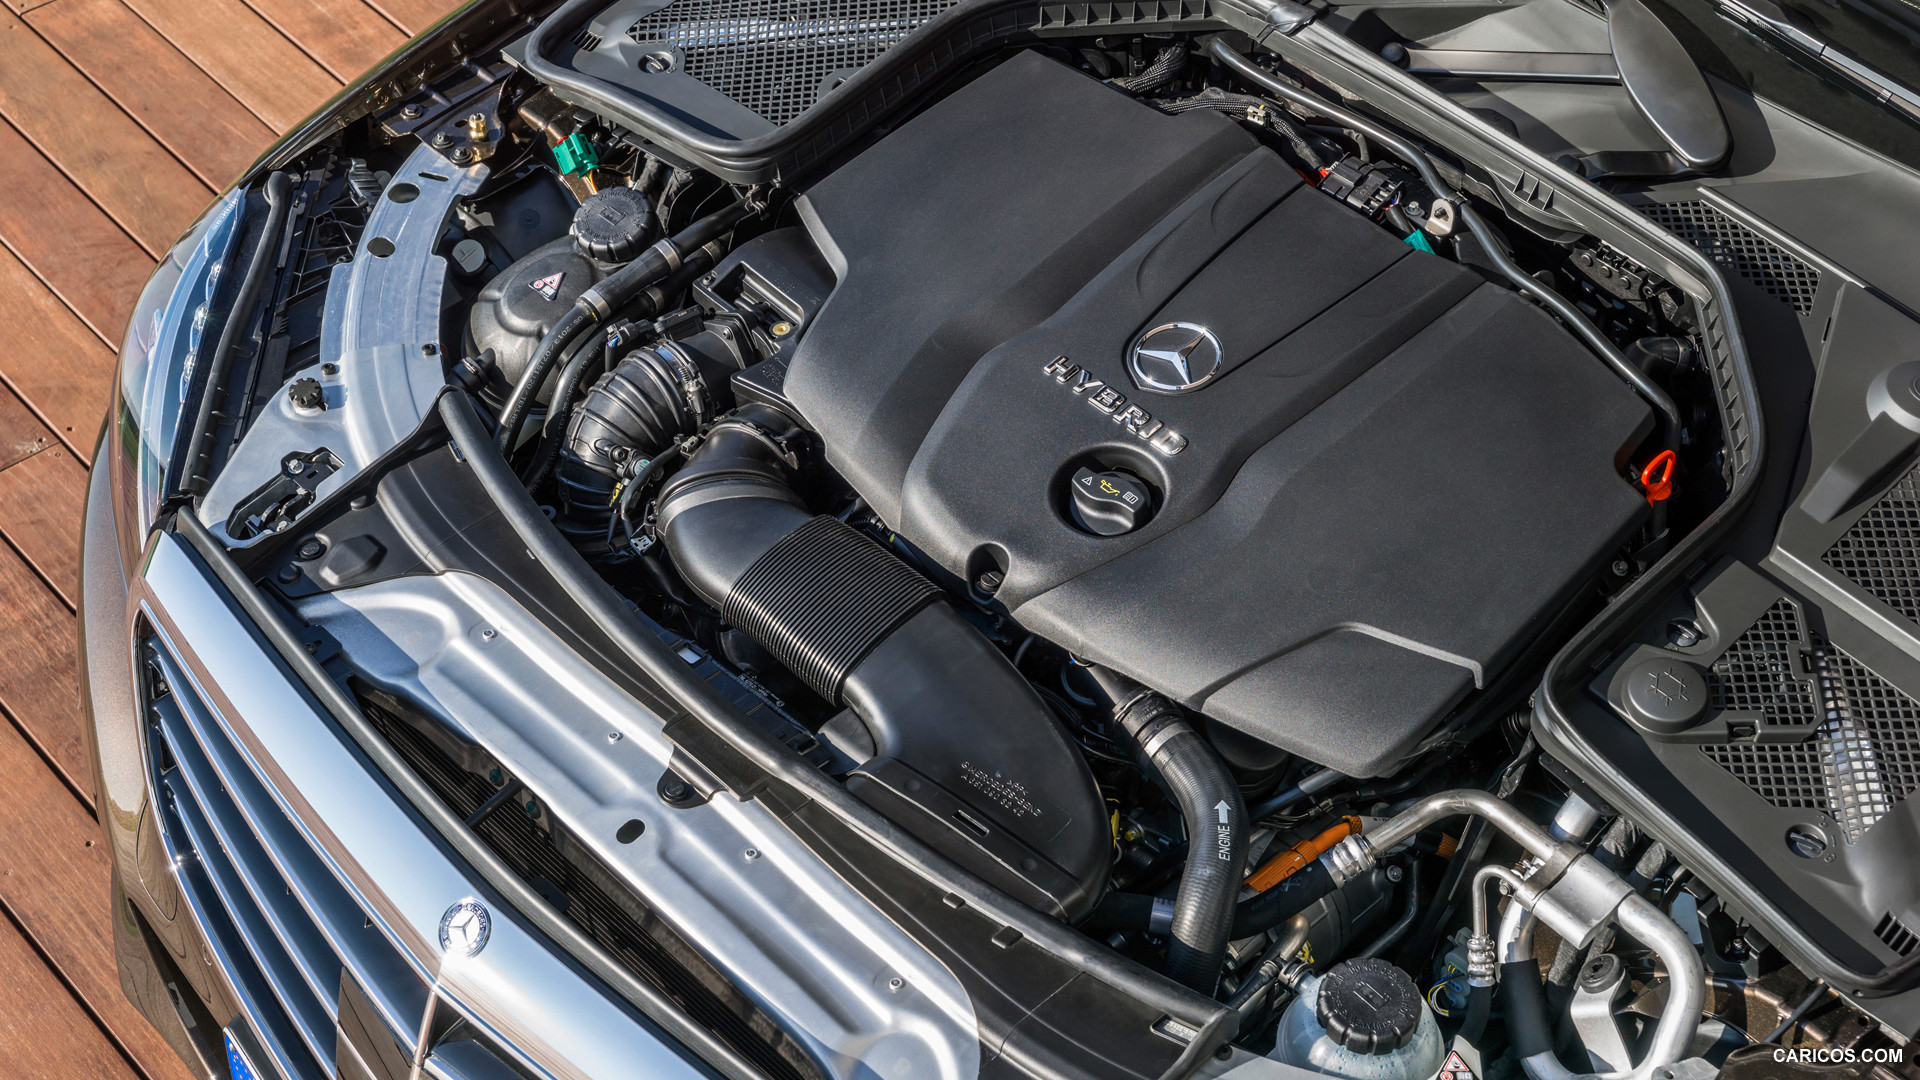 2015 Mercedes-Benz C-Class Estate C300 BlueTEC HYBRID (EXCLUSIV Luxury package) - Engine, #79 of 173